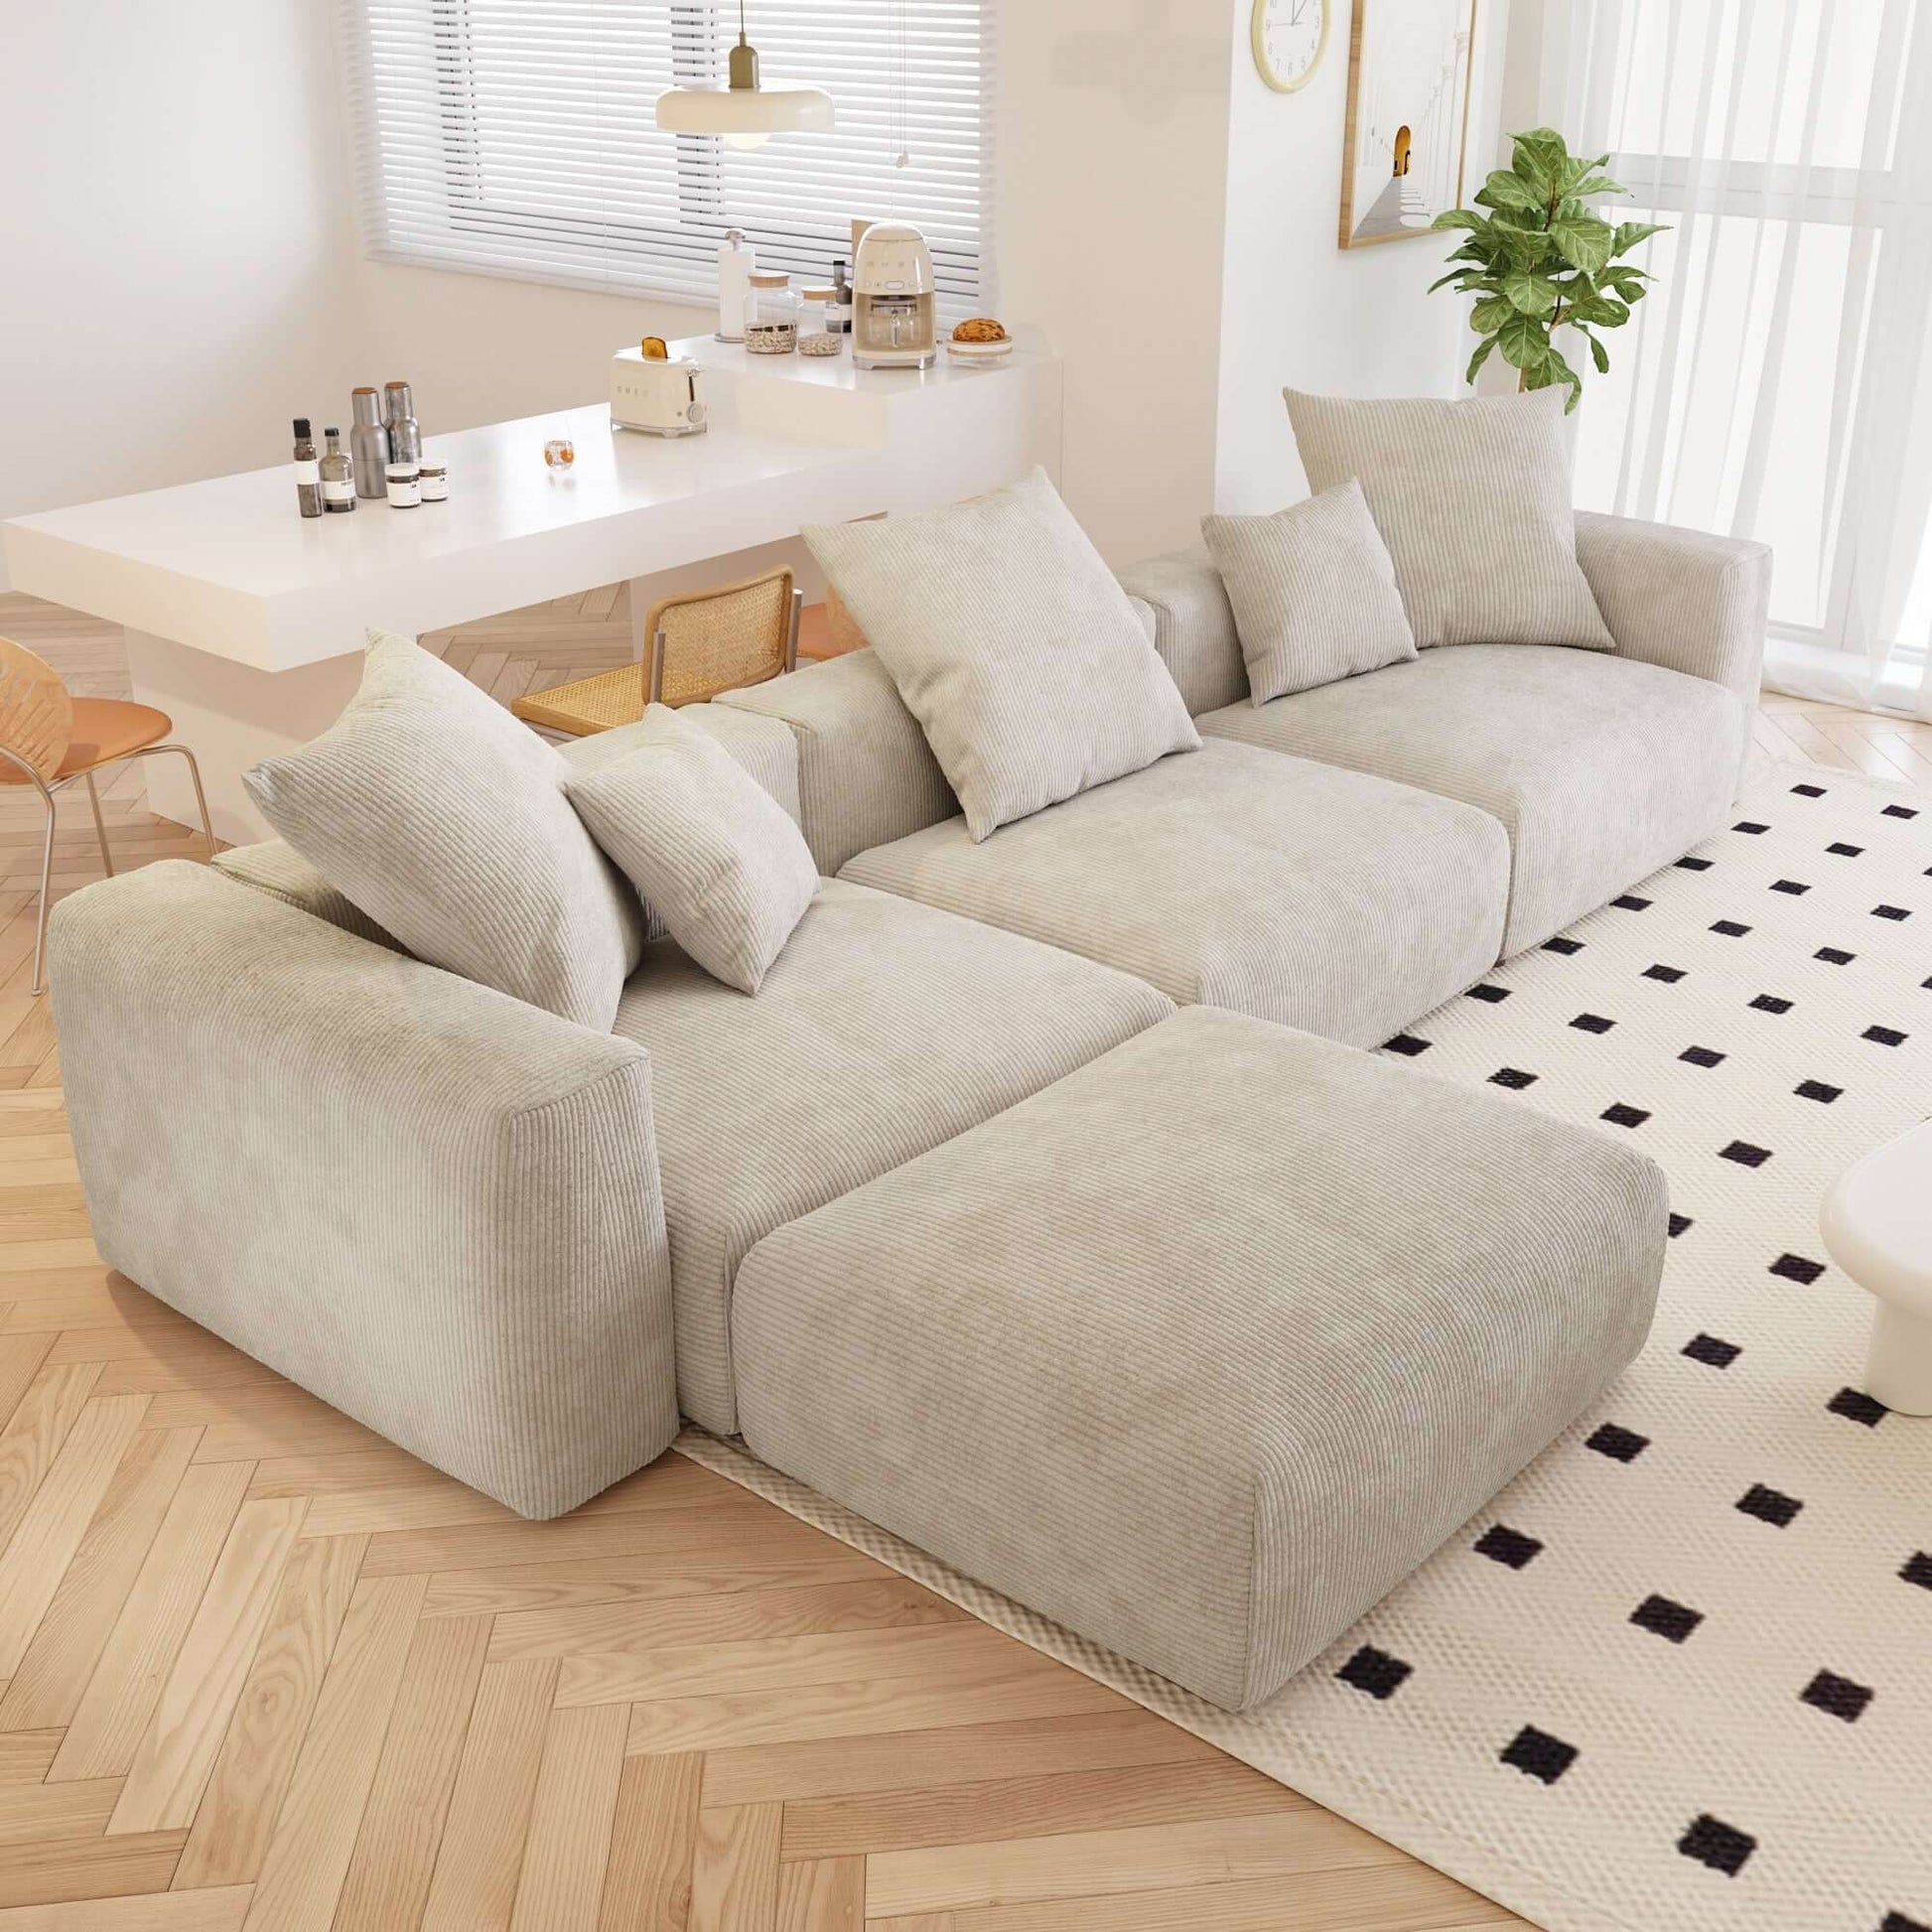 Big-Plush Modular Corduroy Sectional Sofa Customizable (Brown, Black, or Beige)